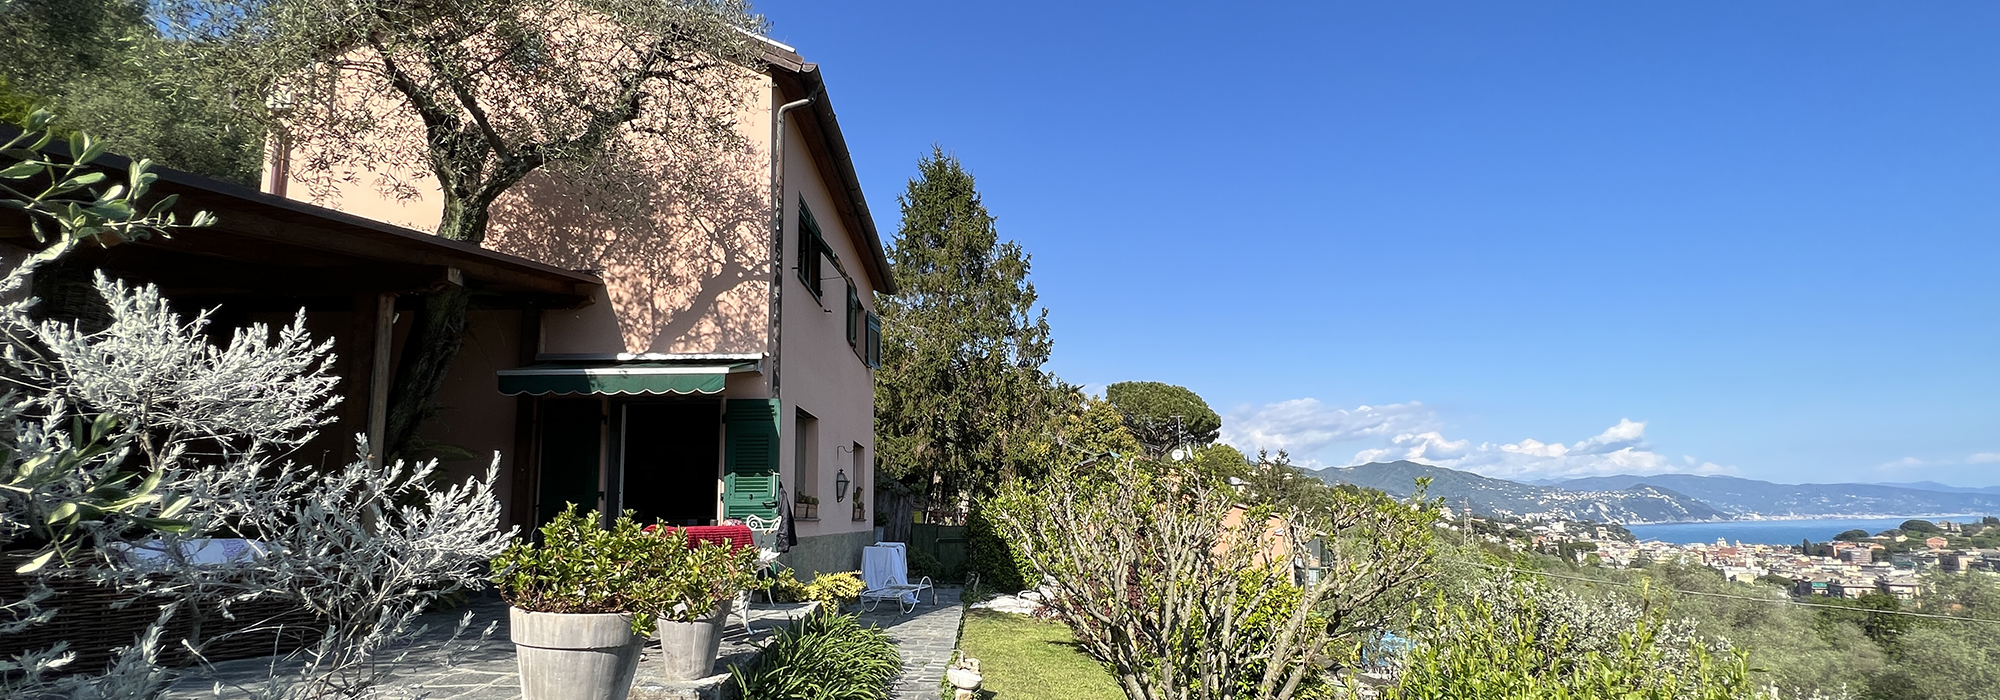 Villa Santa Margherita Ligure